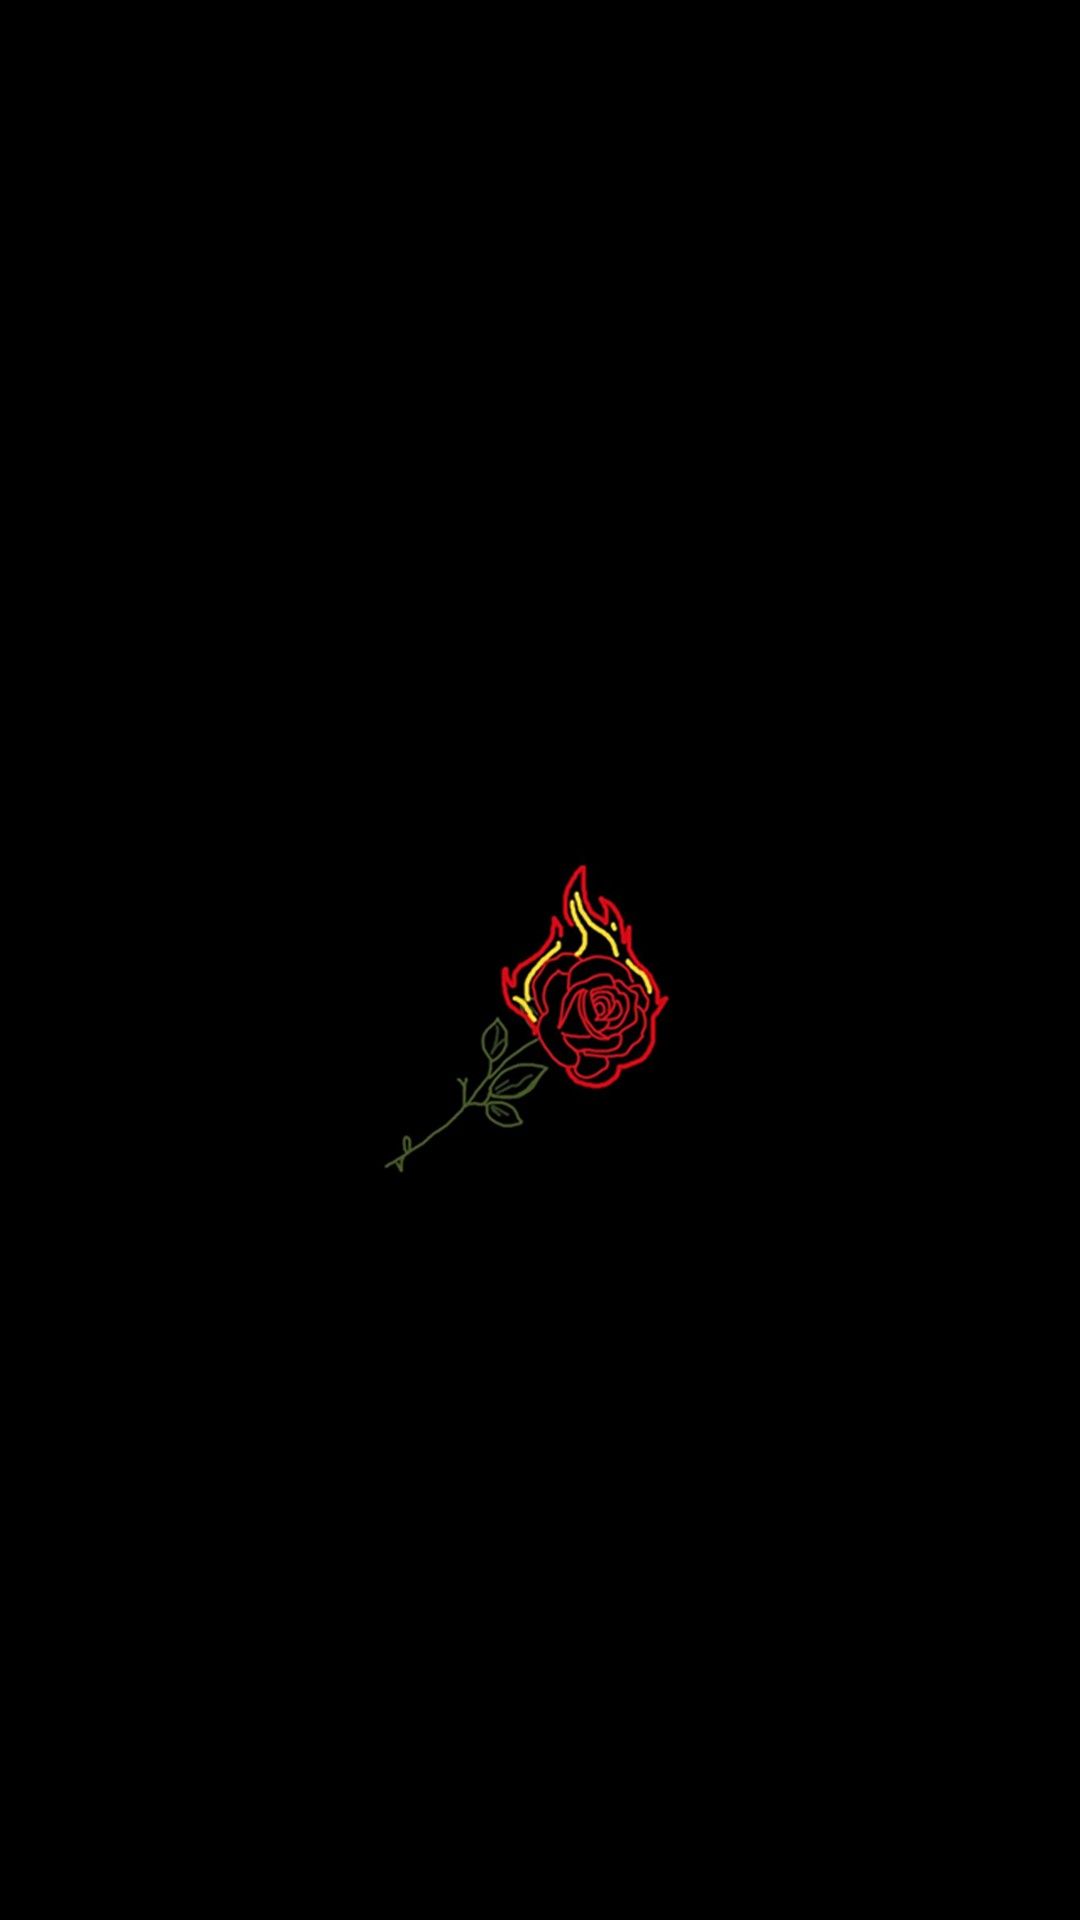 A single rose in the dark on black background - Black